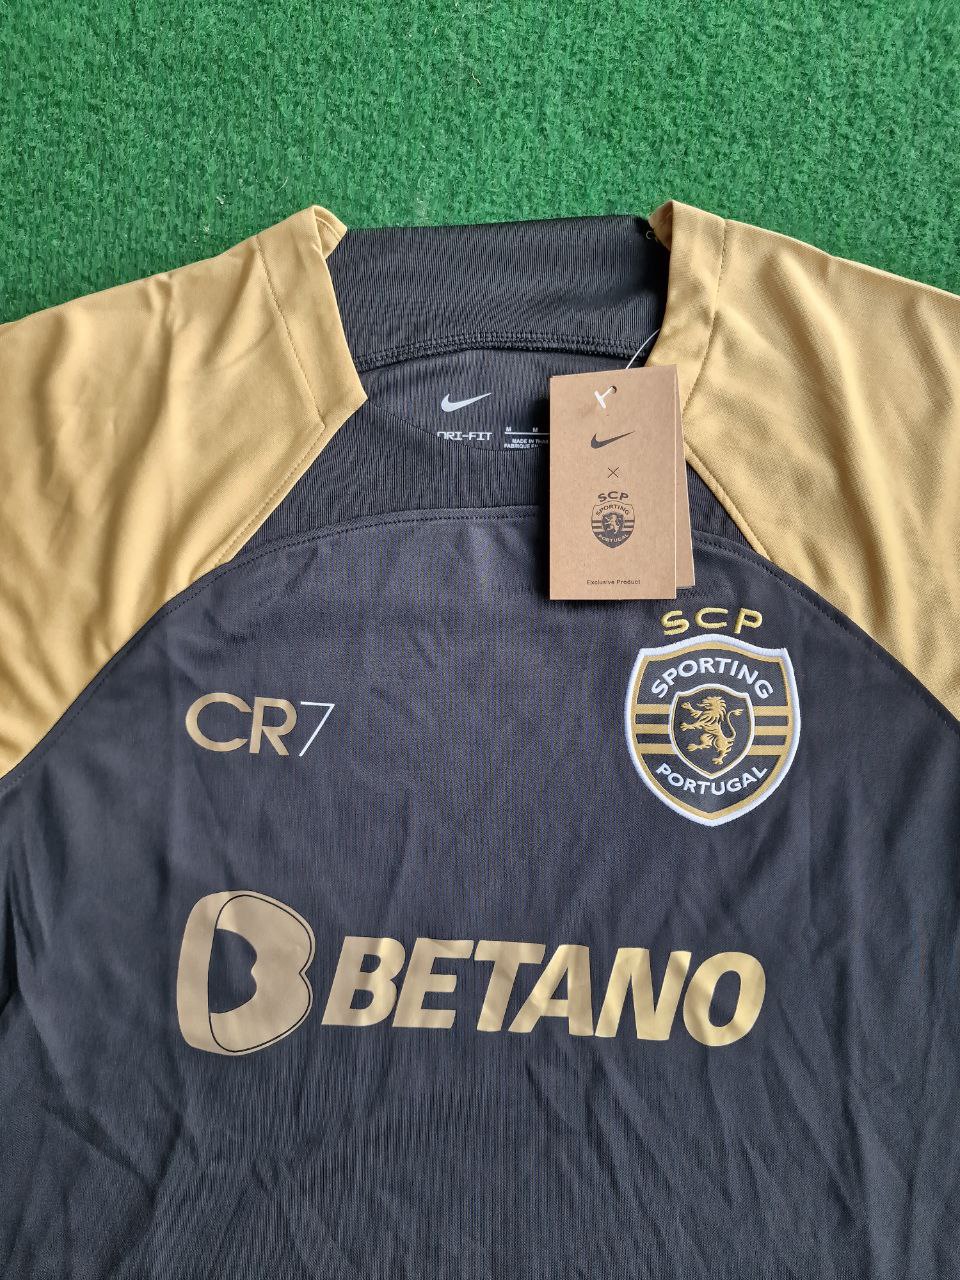 Cristiano Ronaldo Sporting CP Special Edition Jersey